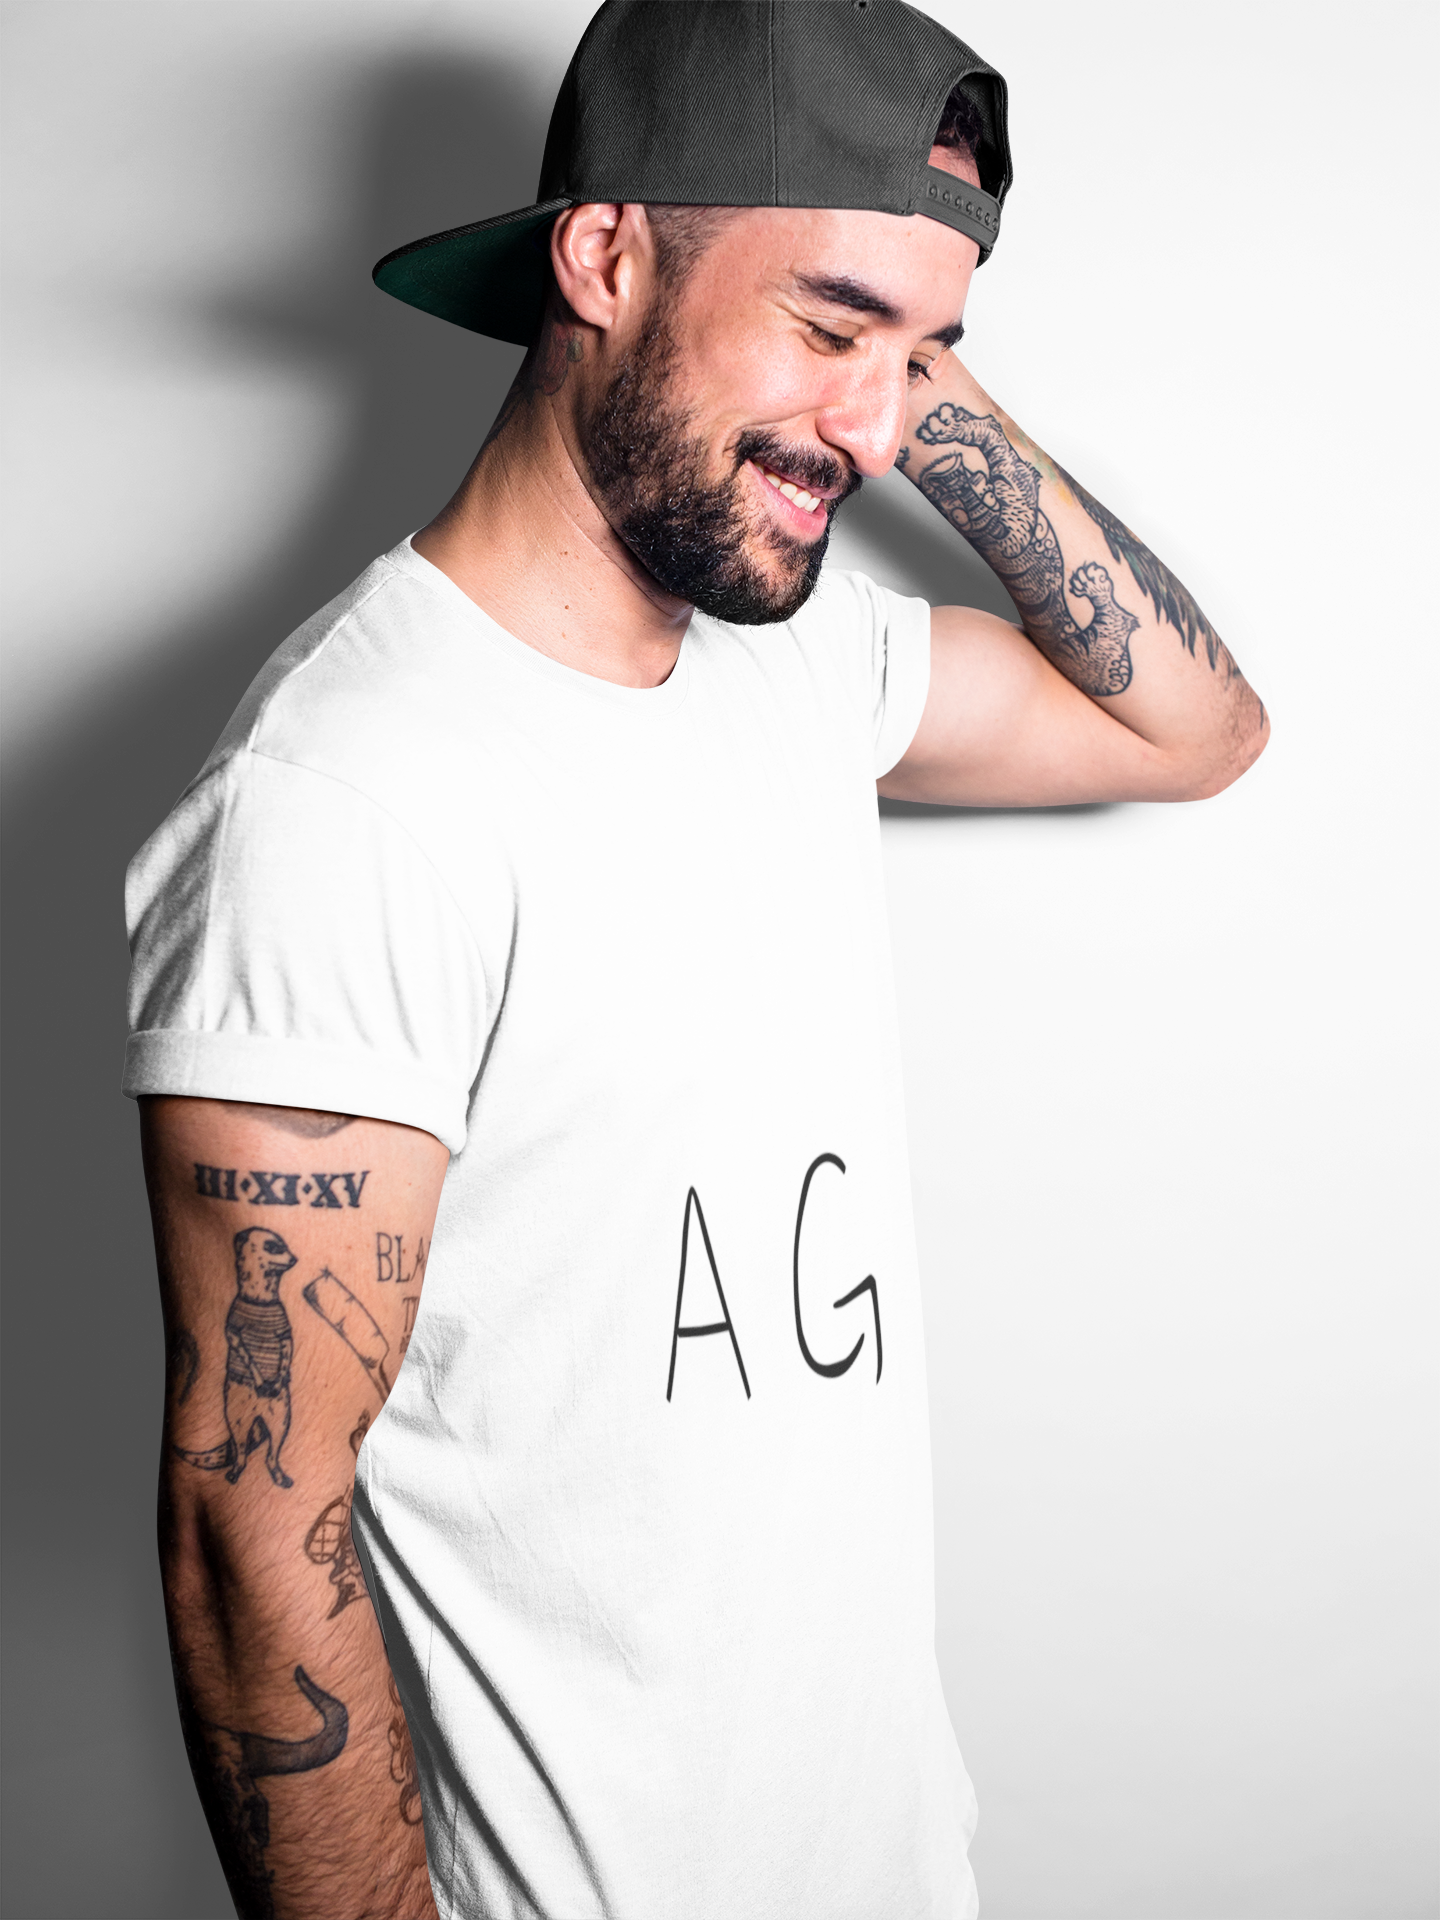 AG Attitude Mens short sleeve t-shirt